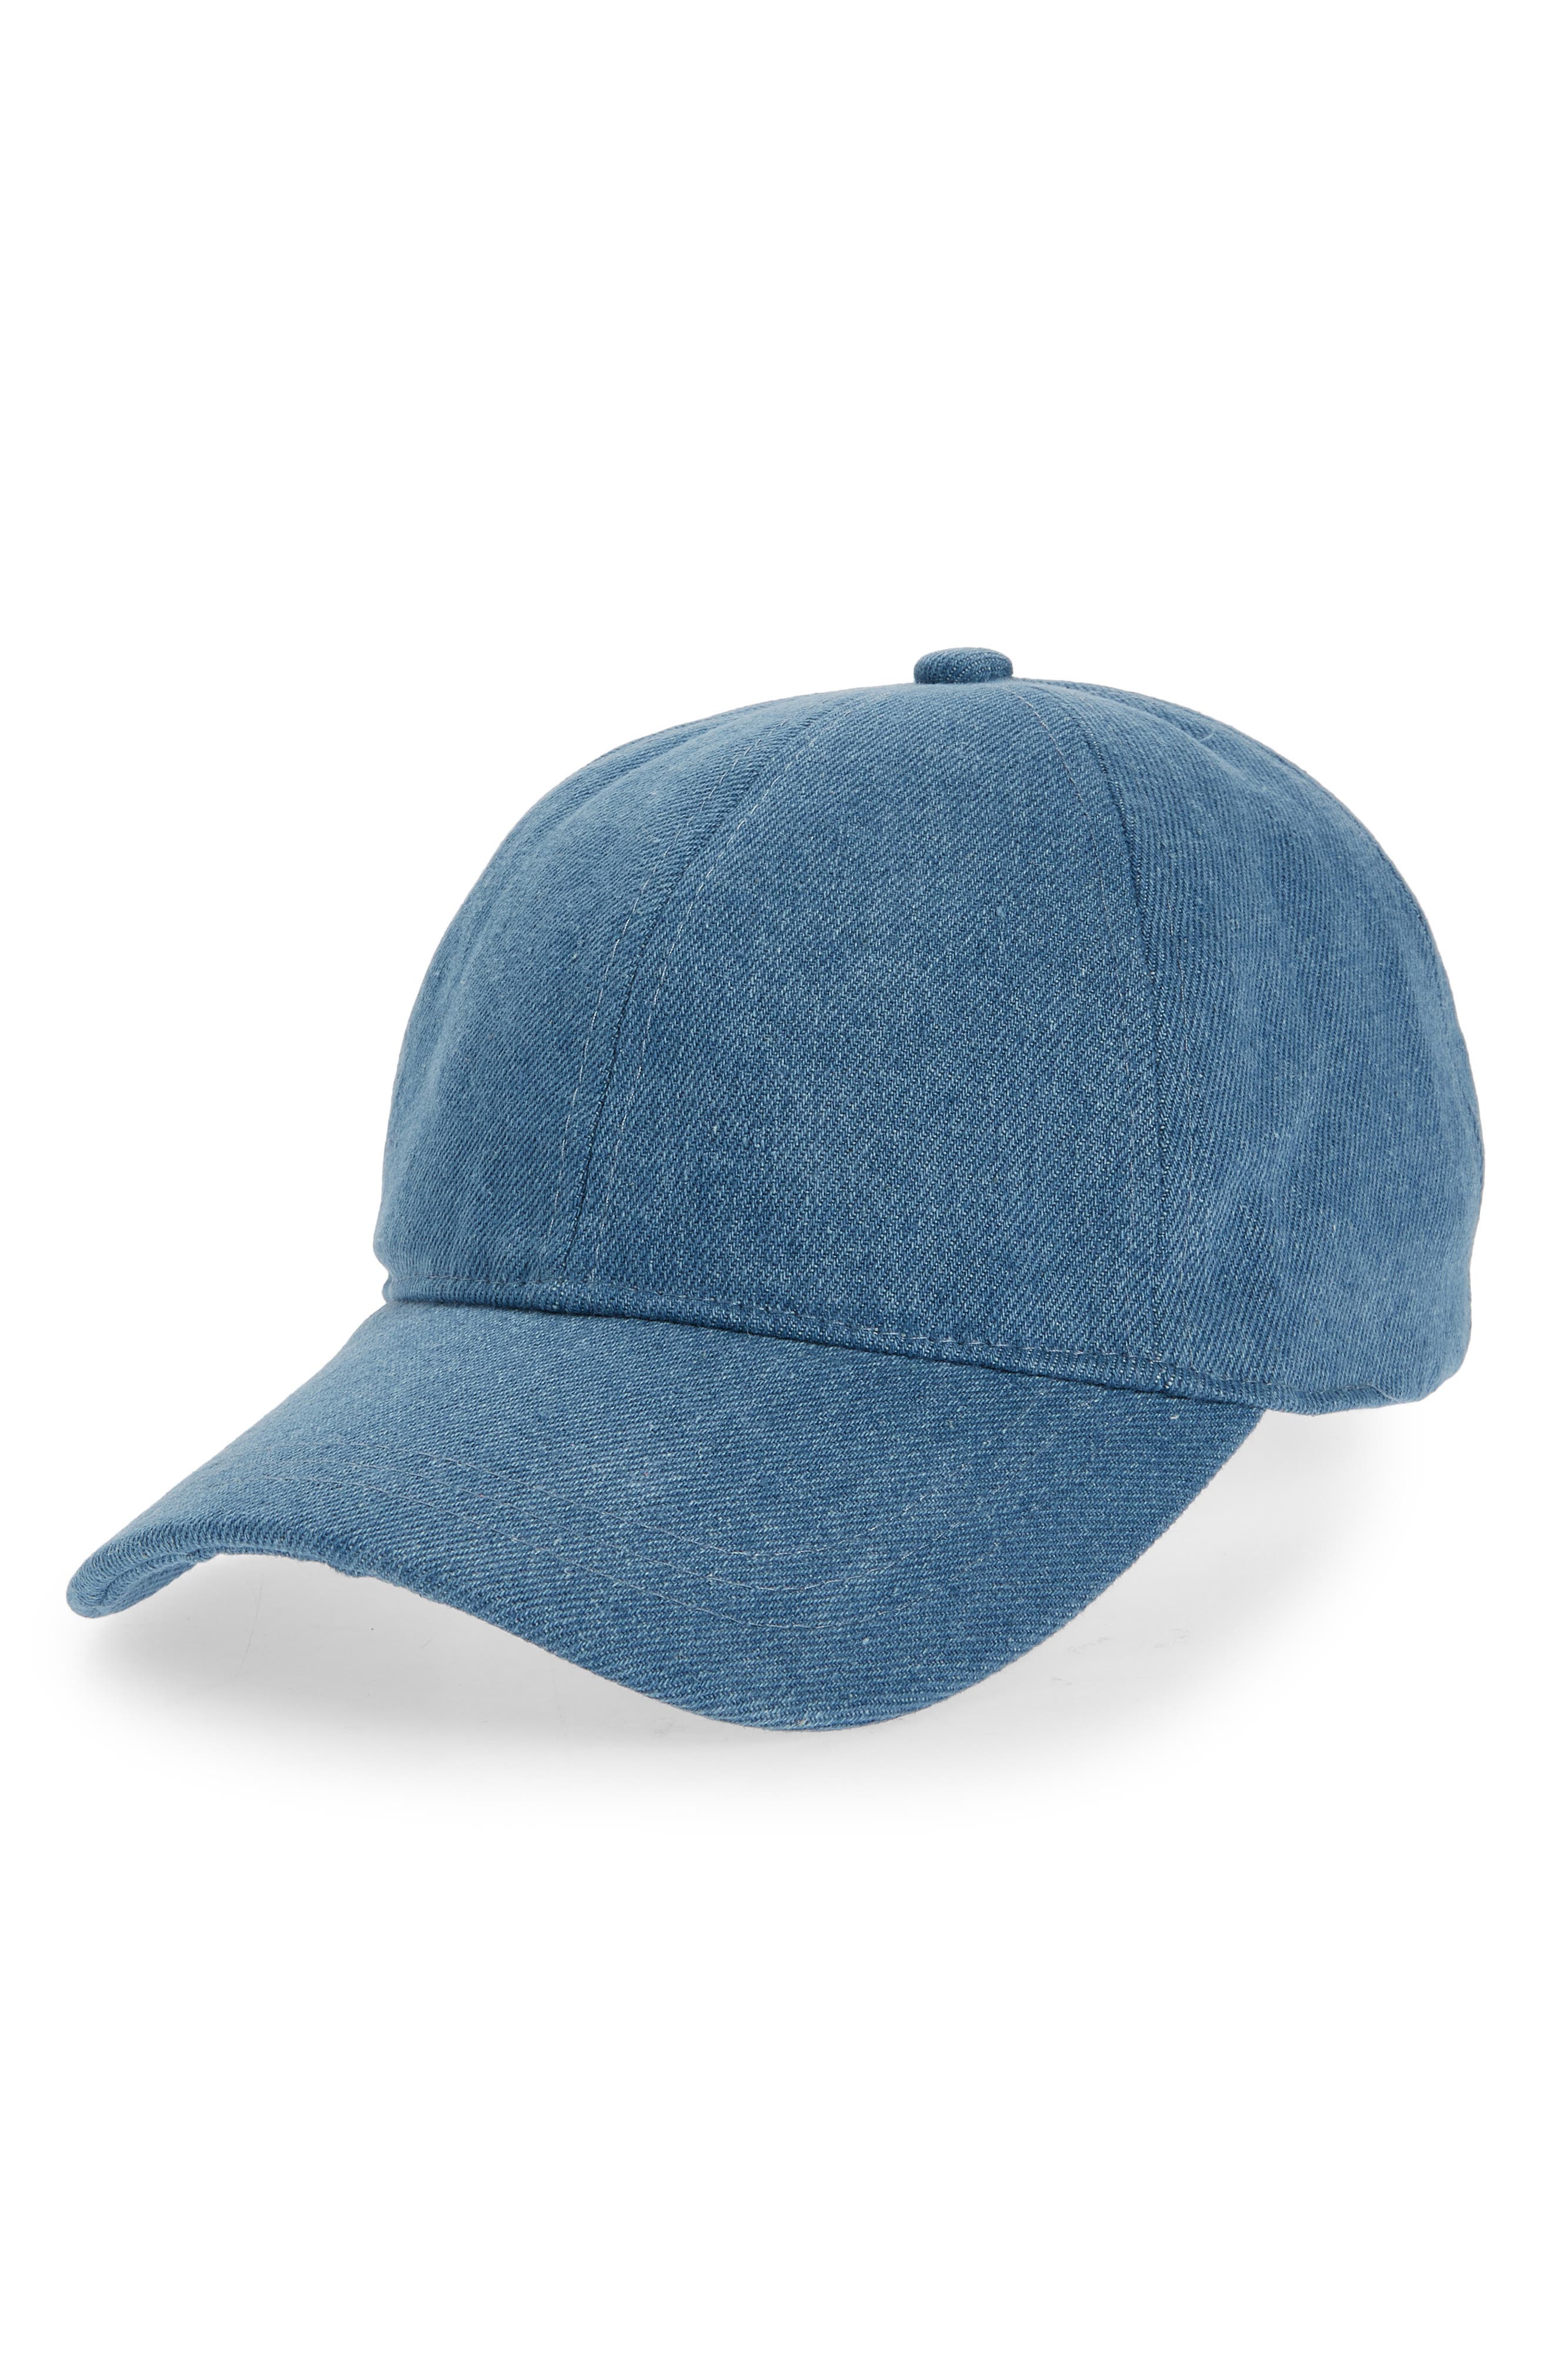 Denim Baseball Cap Green Clover Art Love Summer Hat Adjustable Cotton Sport Caps